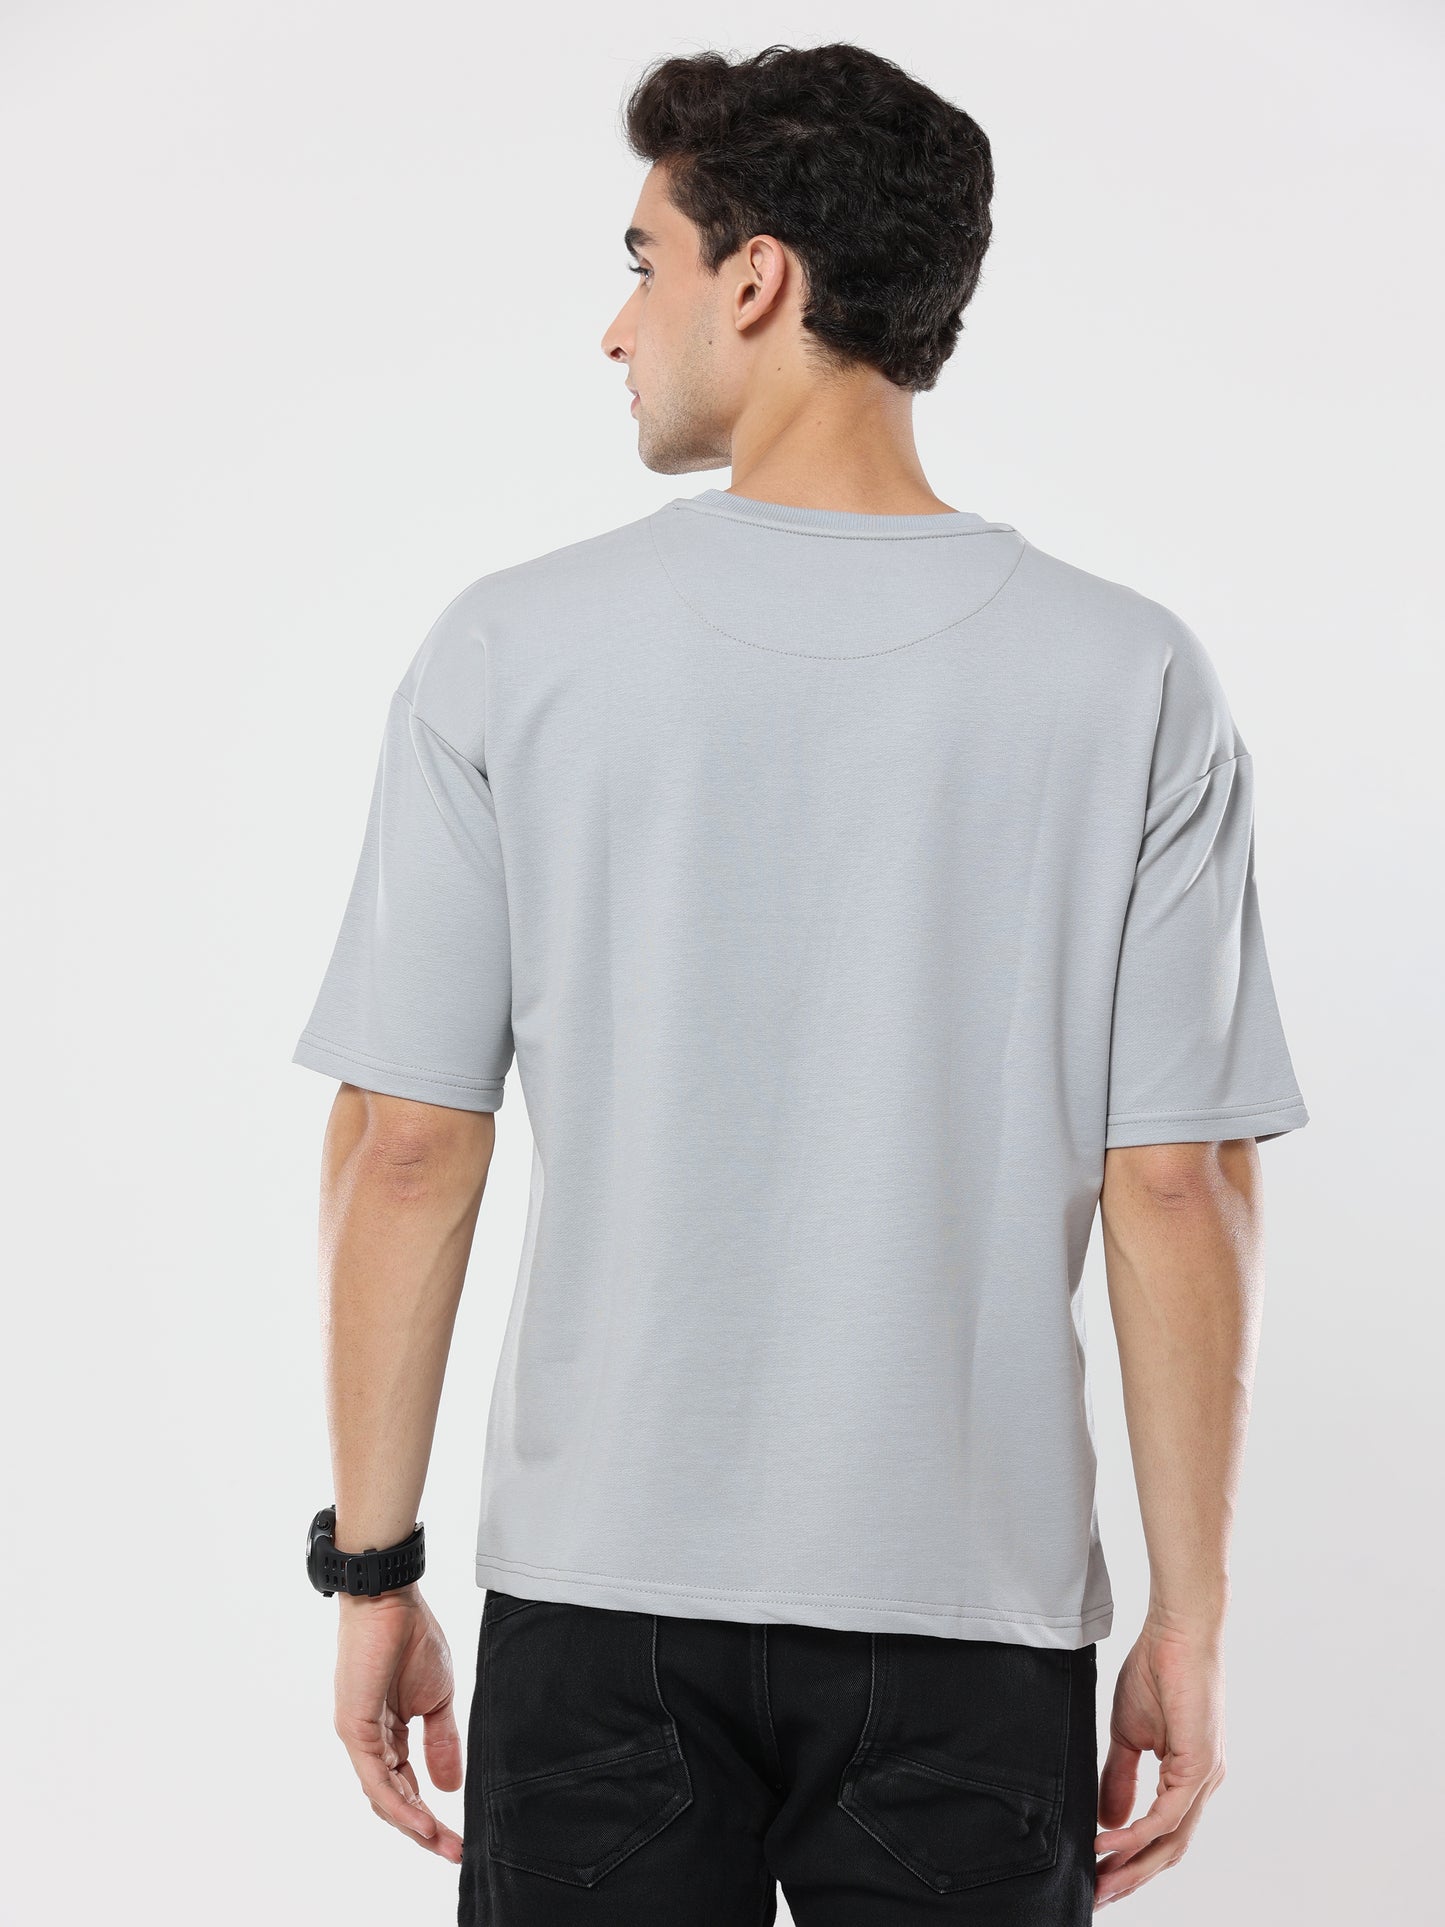 Grey Trouble Maker Print very premium Quality Oversized T-Shirt